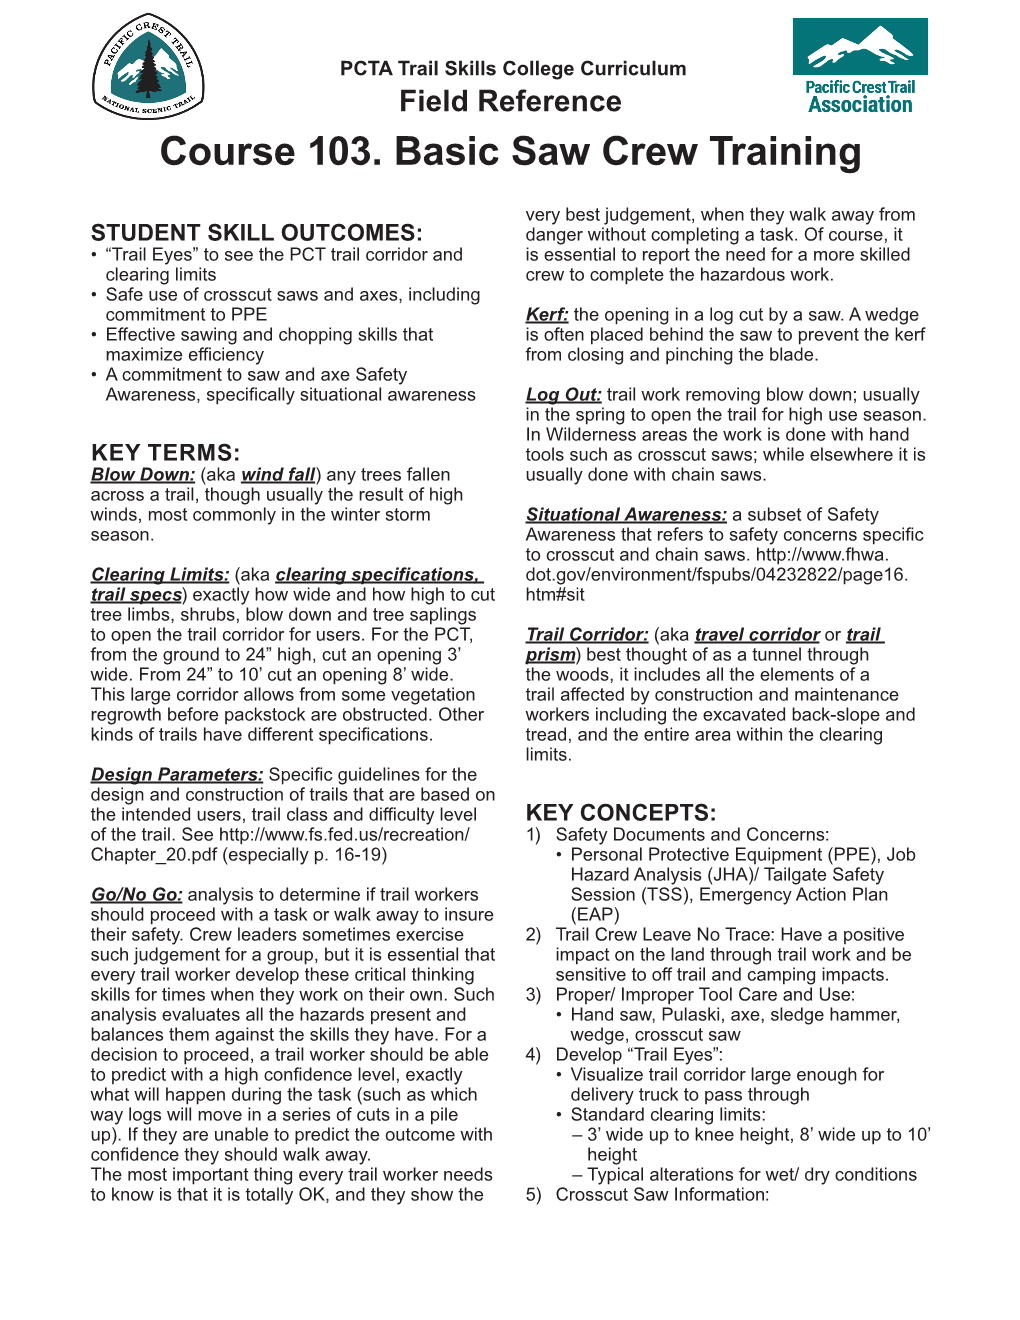 Course 103. Basic Saw Crew Training